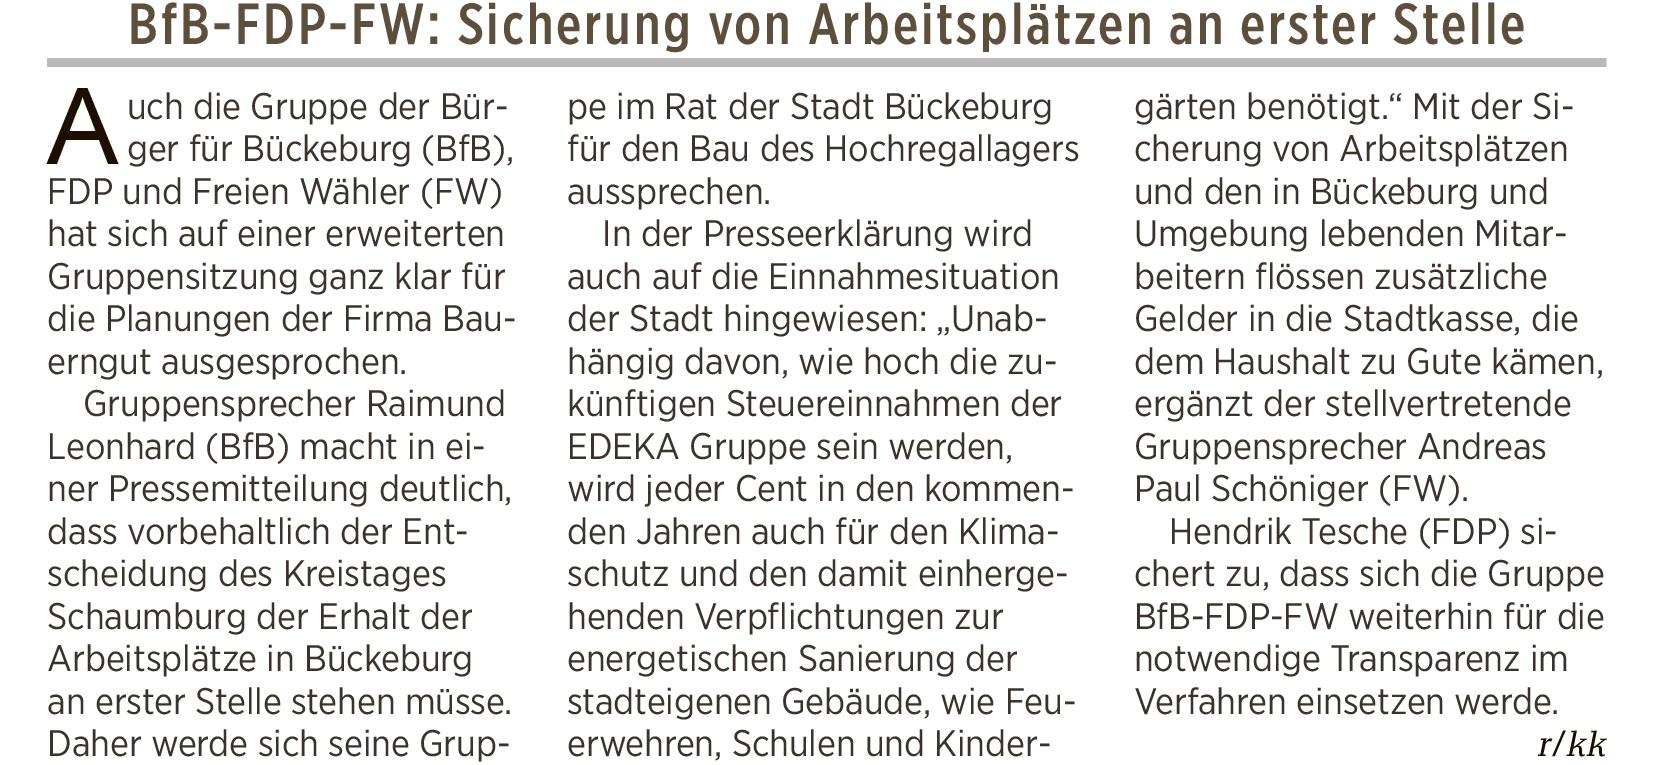 Tageszeitung 2016 150158   Schaumburger Nachrichten 15052021 b bauerngut kdd 001